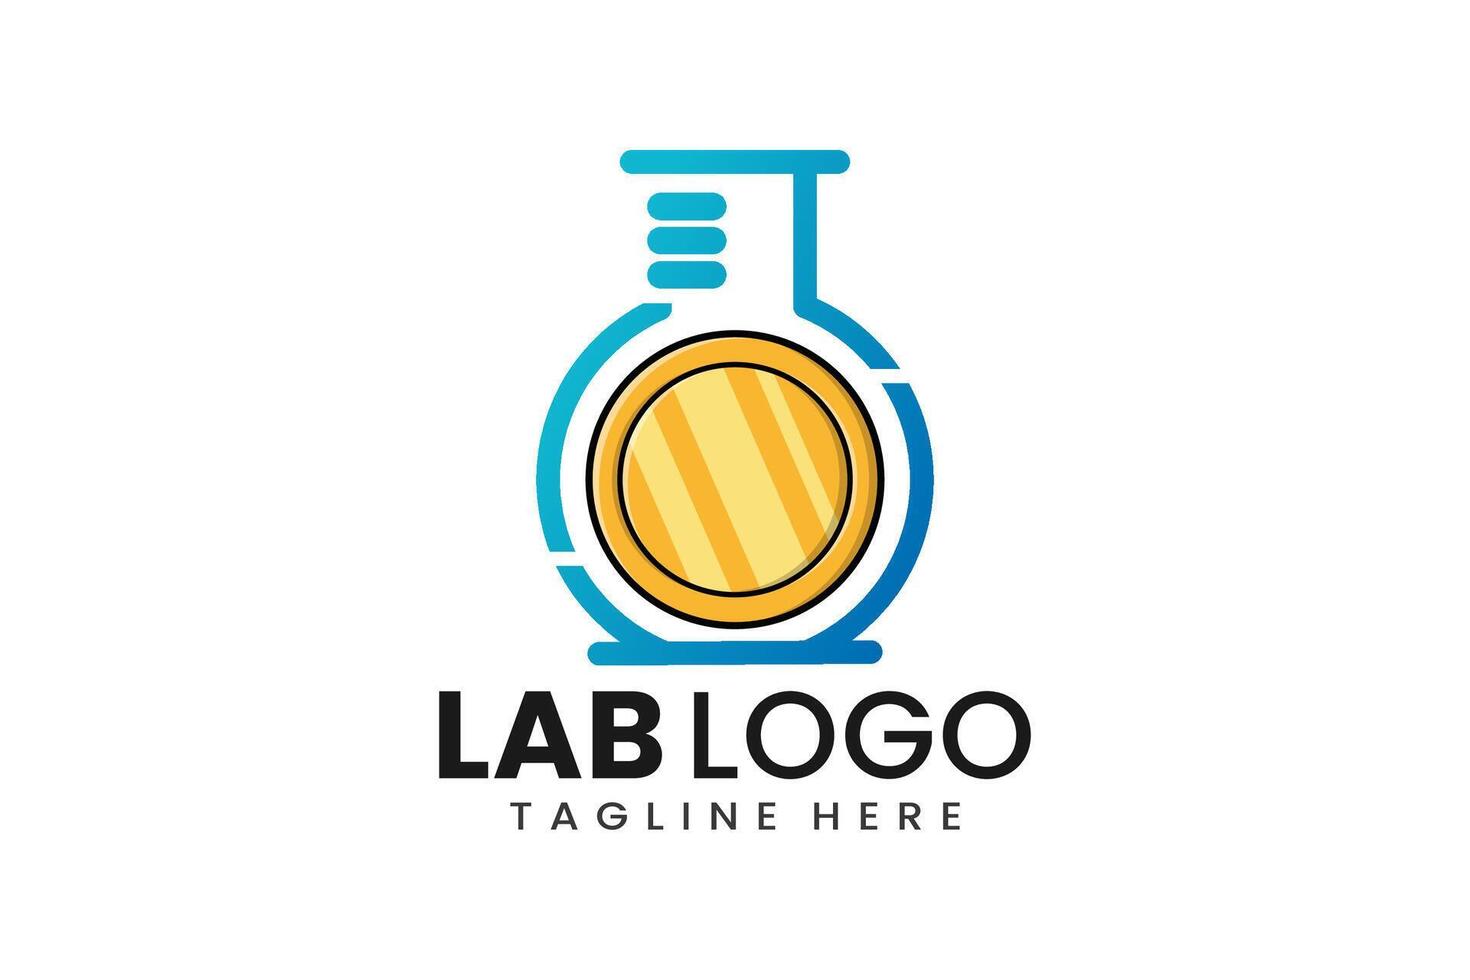 plano moderno sencillo oro moneda laboratorio logo modelo icono símbolo diseño ilustración vector